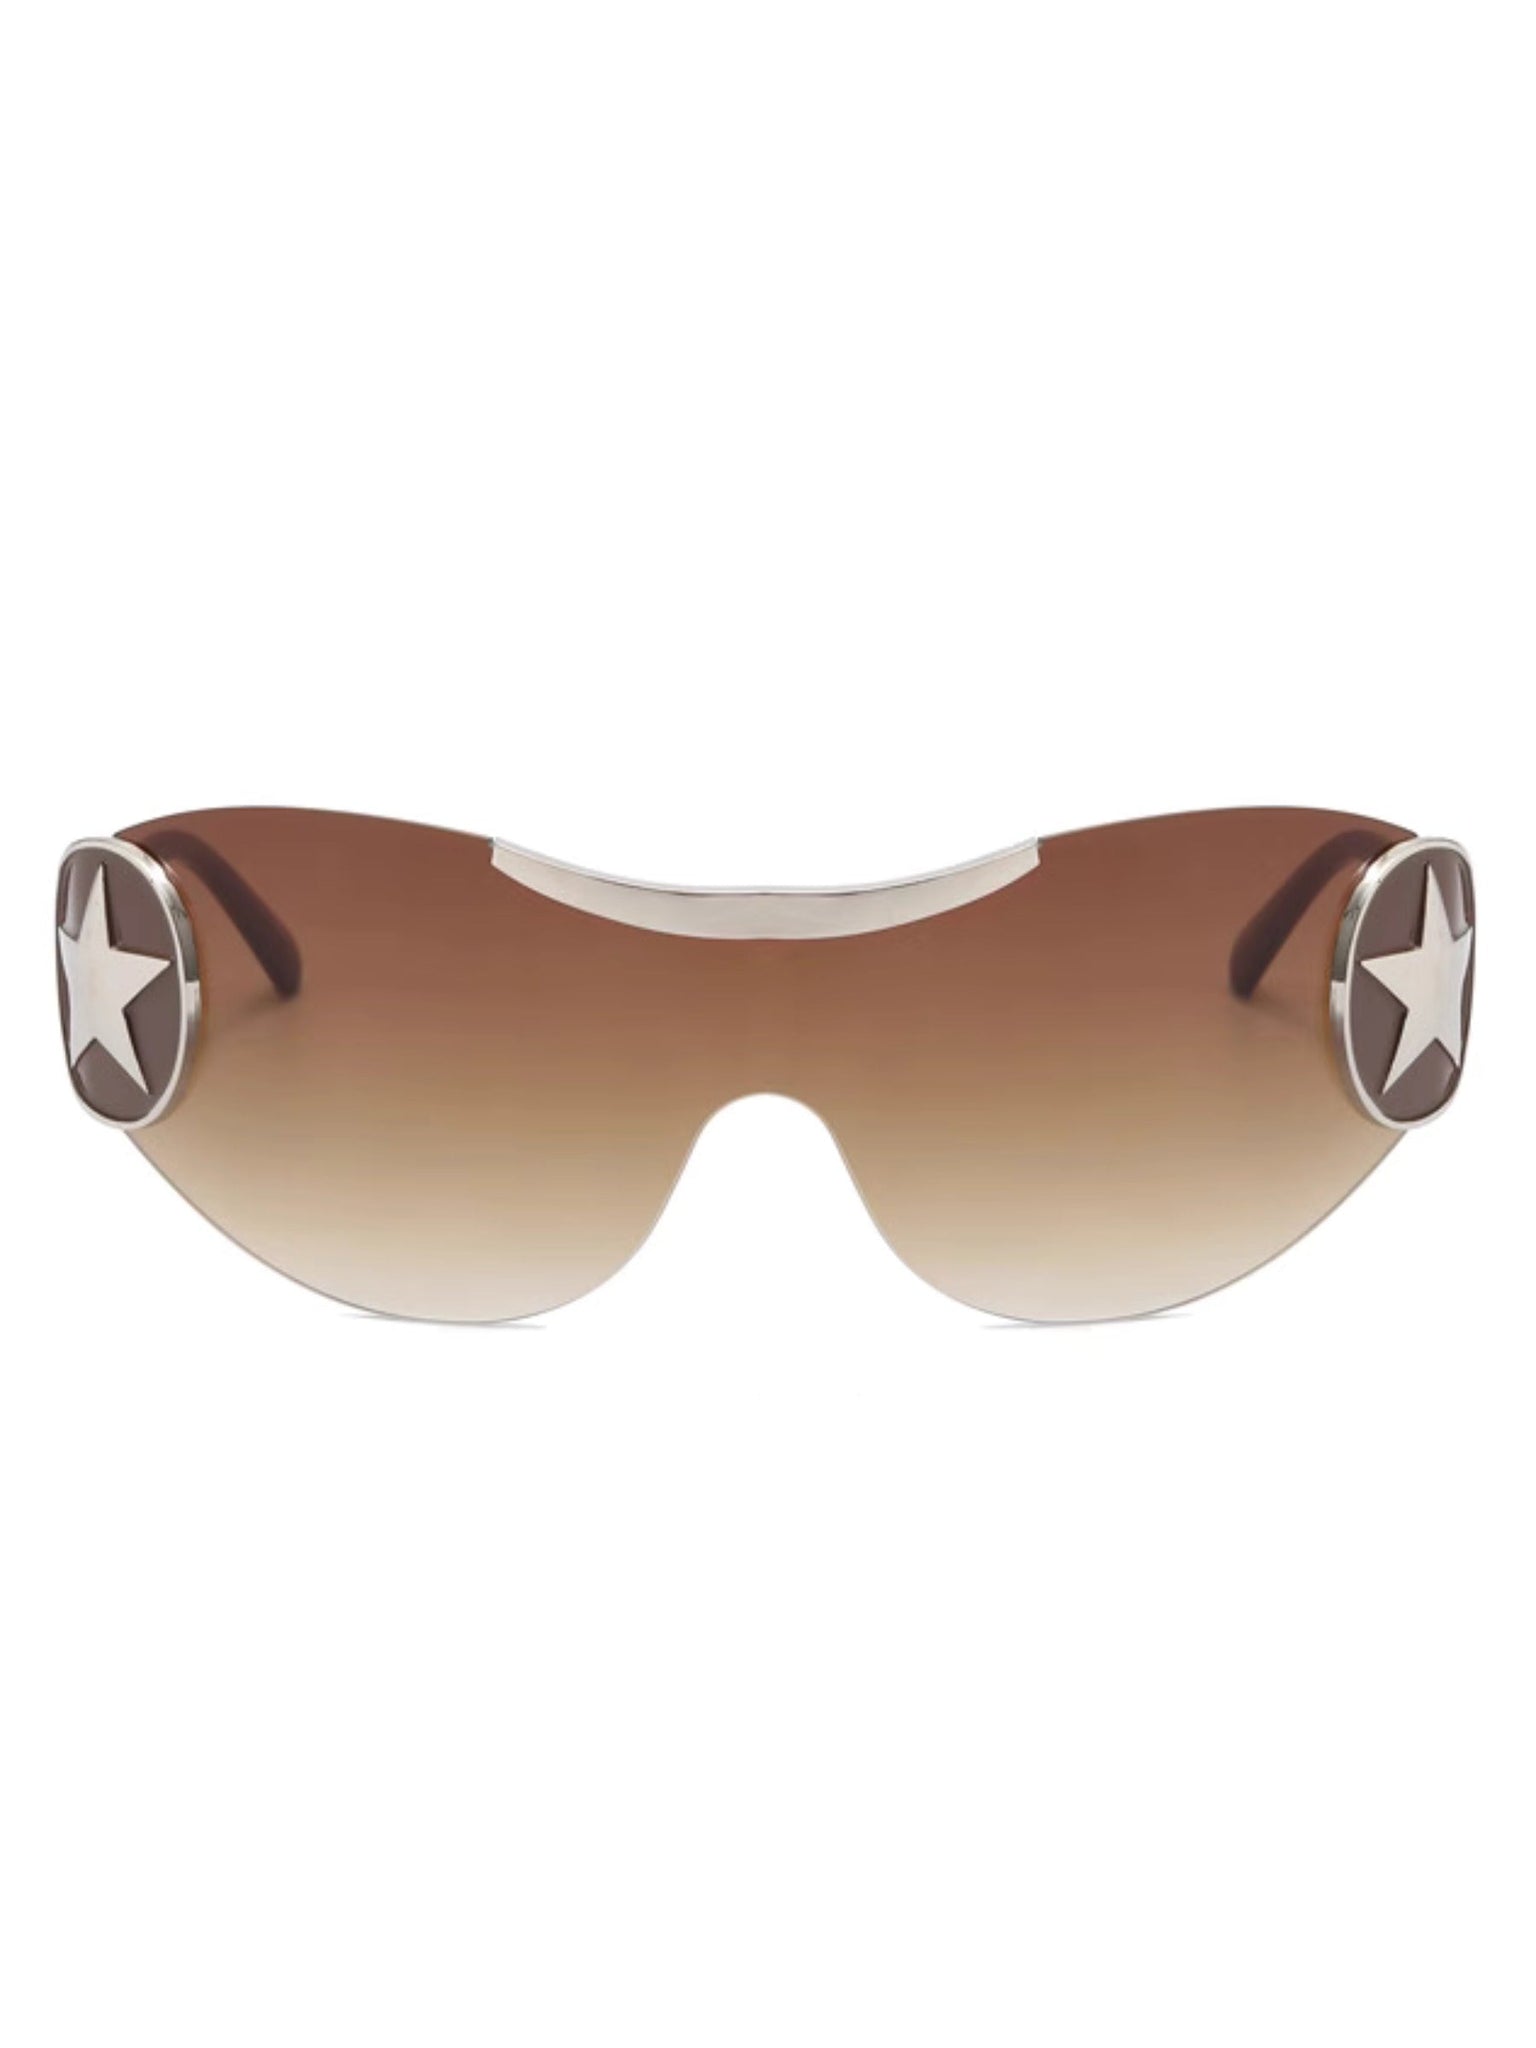 LaPose Fashion - Heidi Frameless Sunglasses - Accesories, Sunglasses